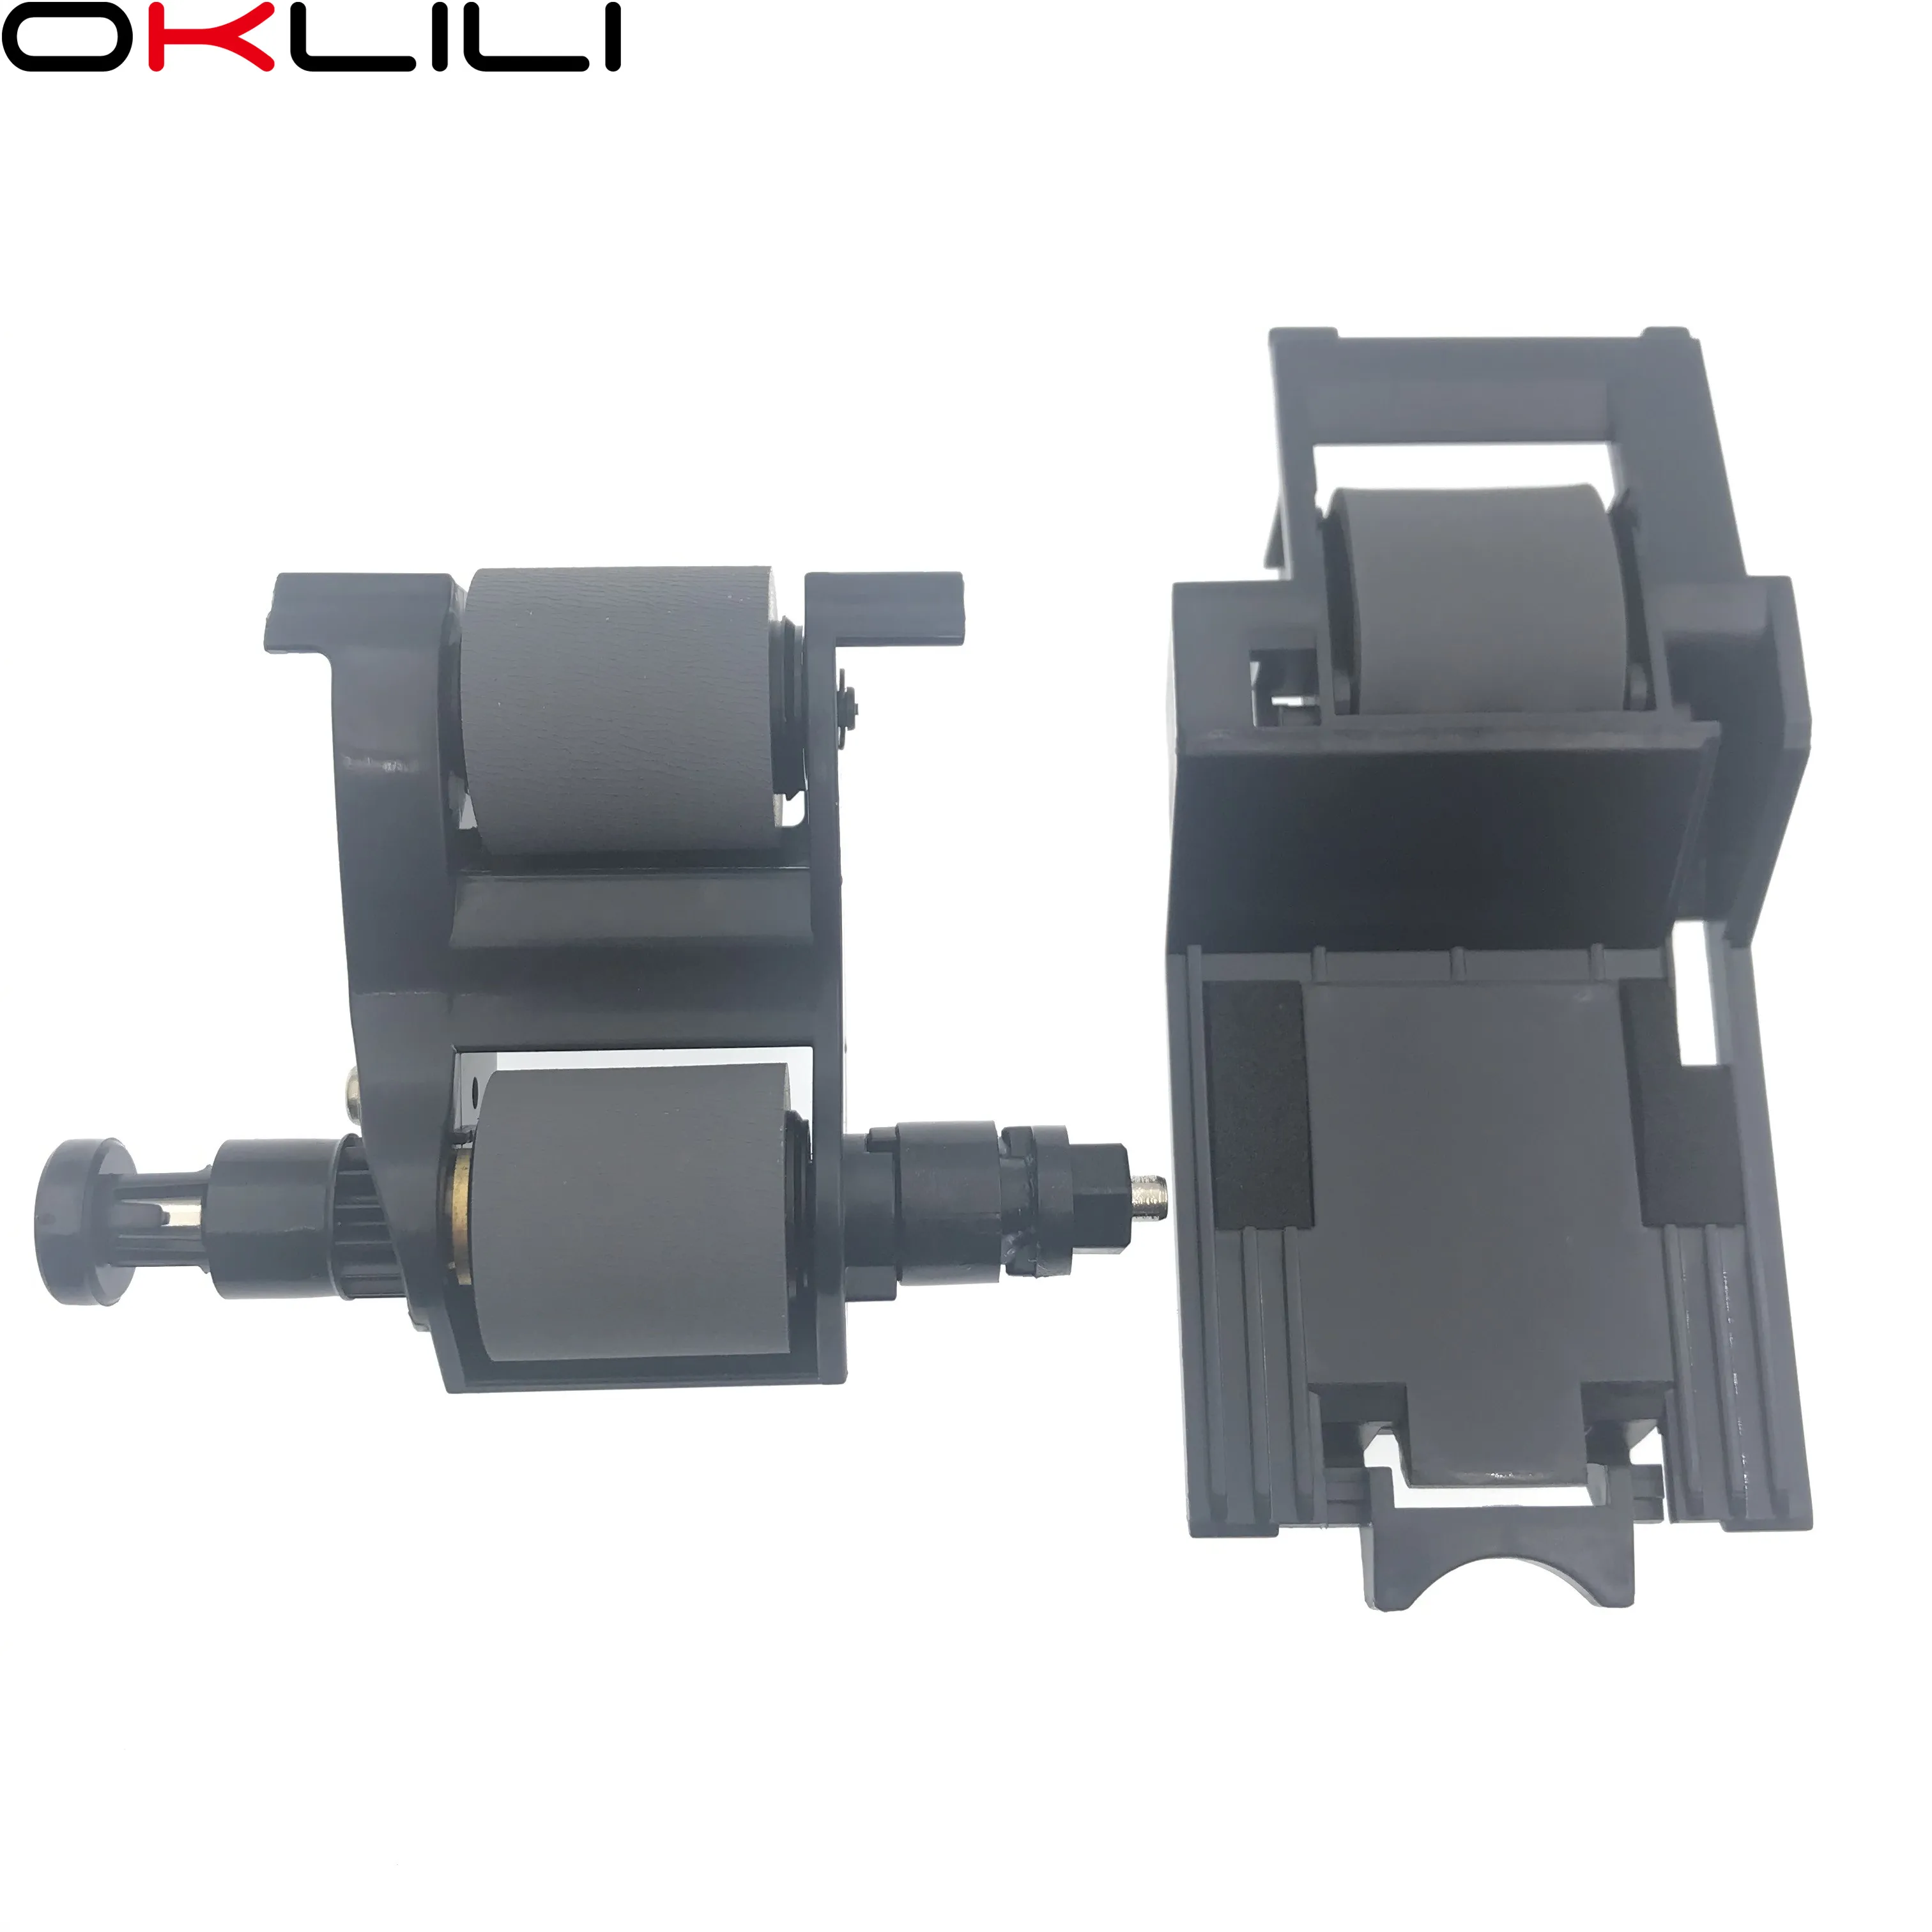 OKLILI 1SET X L2725-60002 L2718A Doc Feeder ADF Pickup Roller Separation Pad Replacement Kit Maintenance Kit Compatible with HP M630 M680 M651 M525 M575 M725 M775 X585 7500 8500 